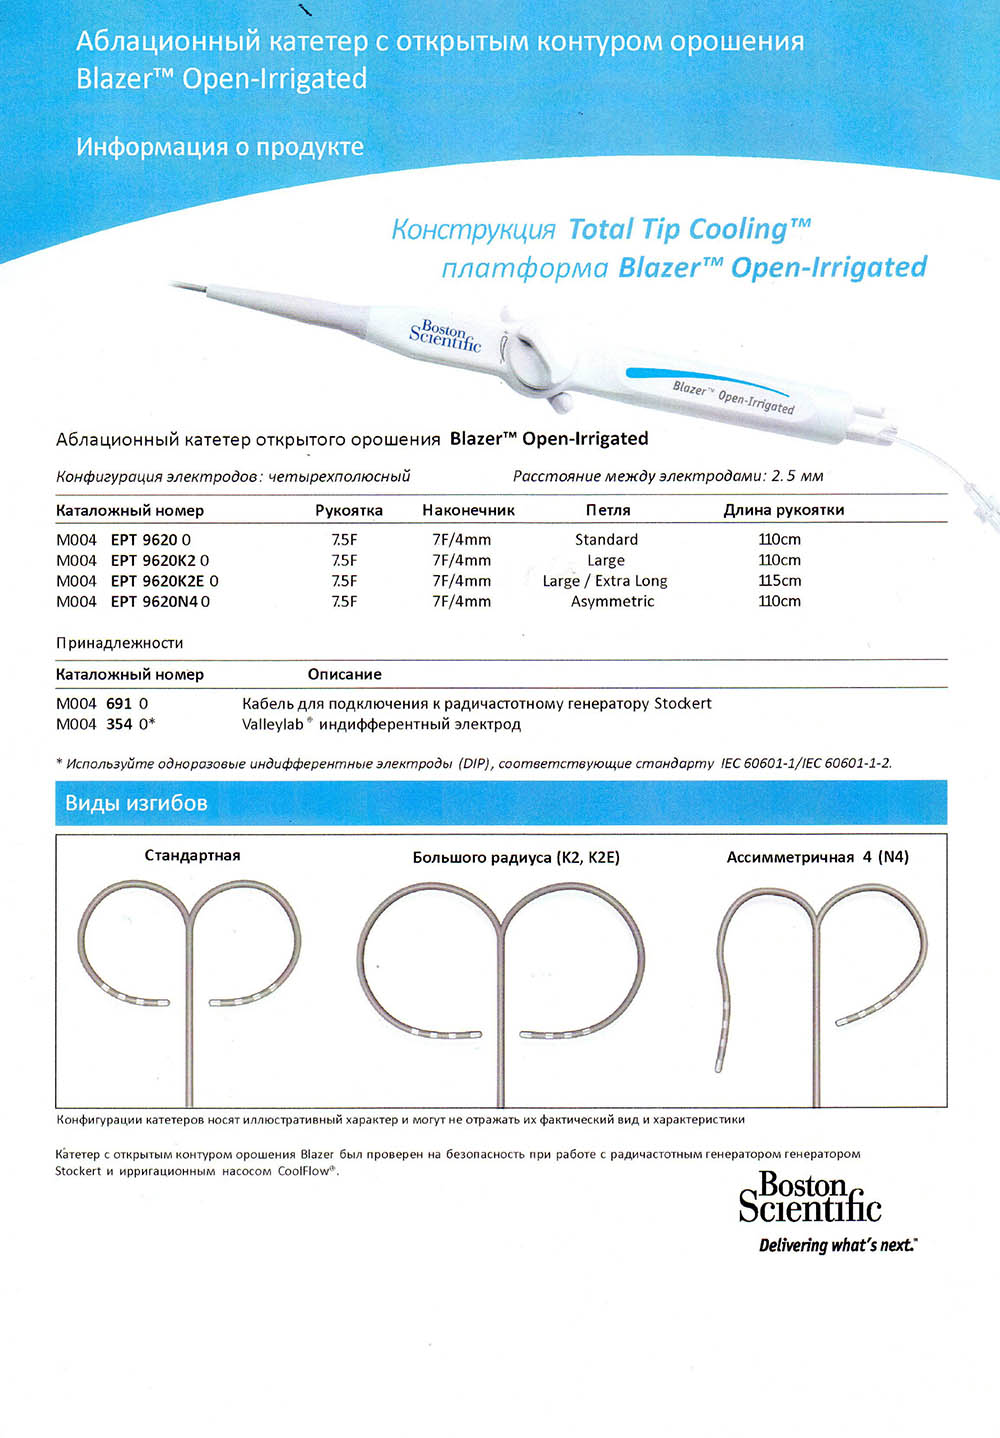 Open loop ablation catheter